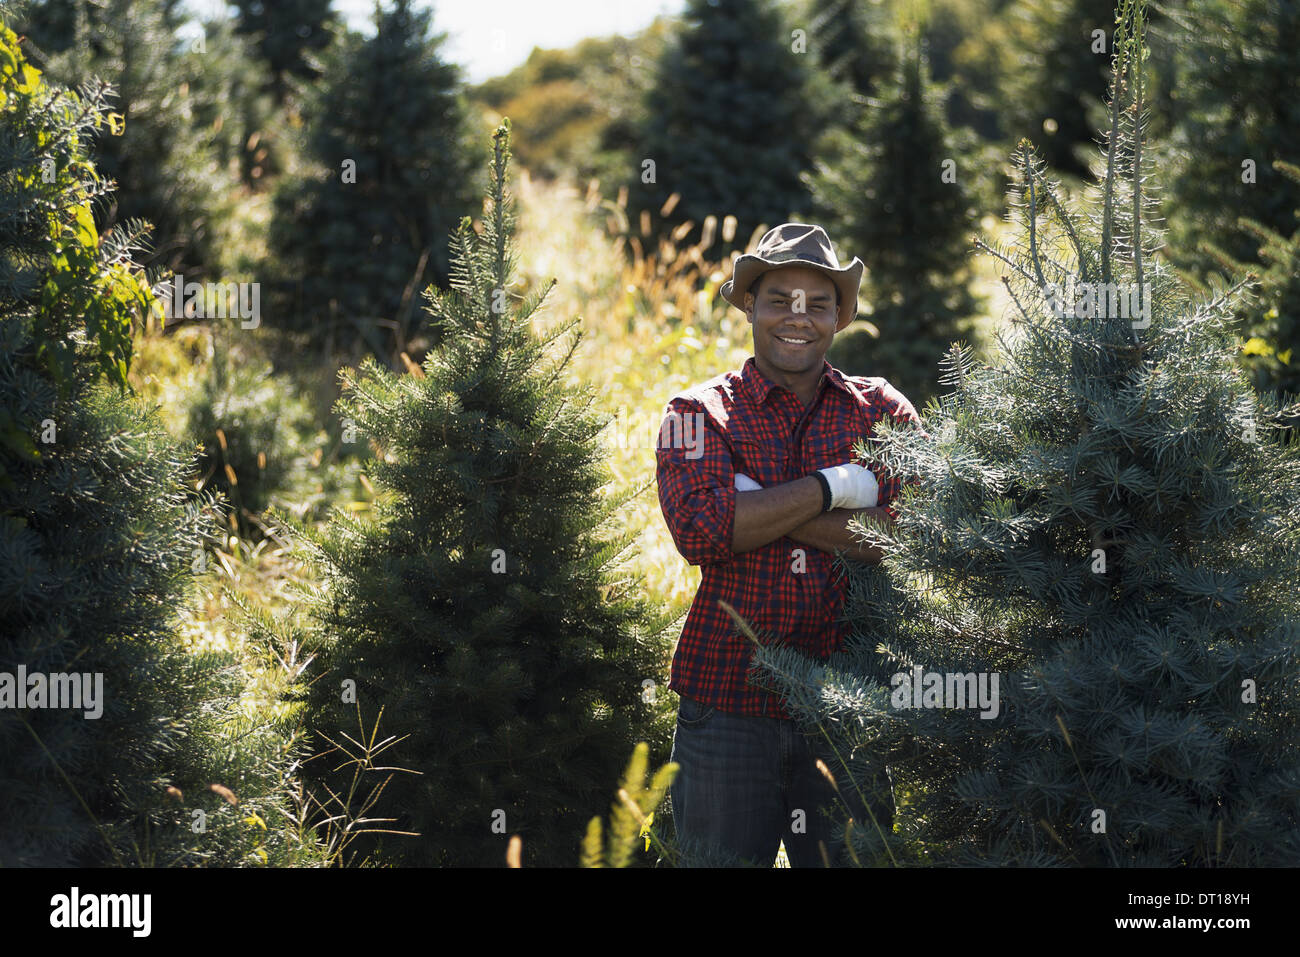 Woodstock New York USA man wearing checked shirt organic Christmas trees Stock Photo